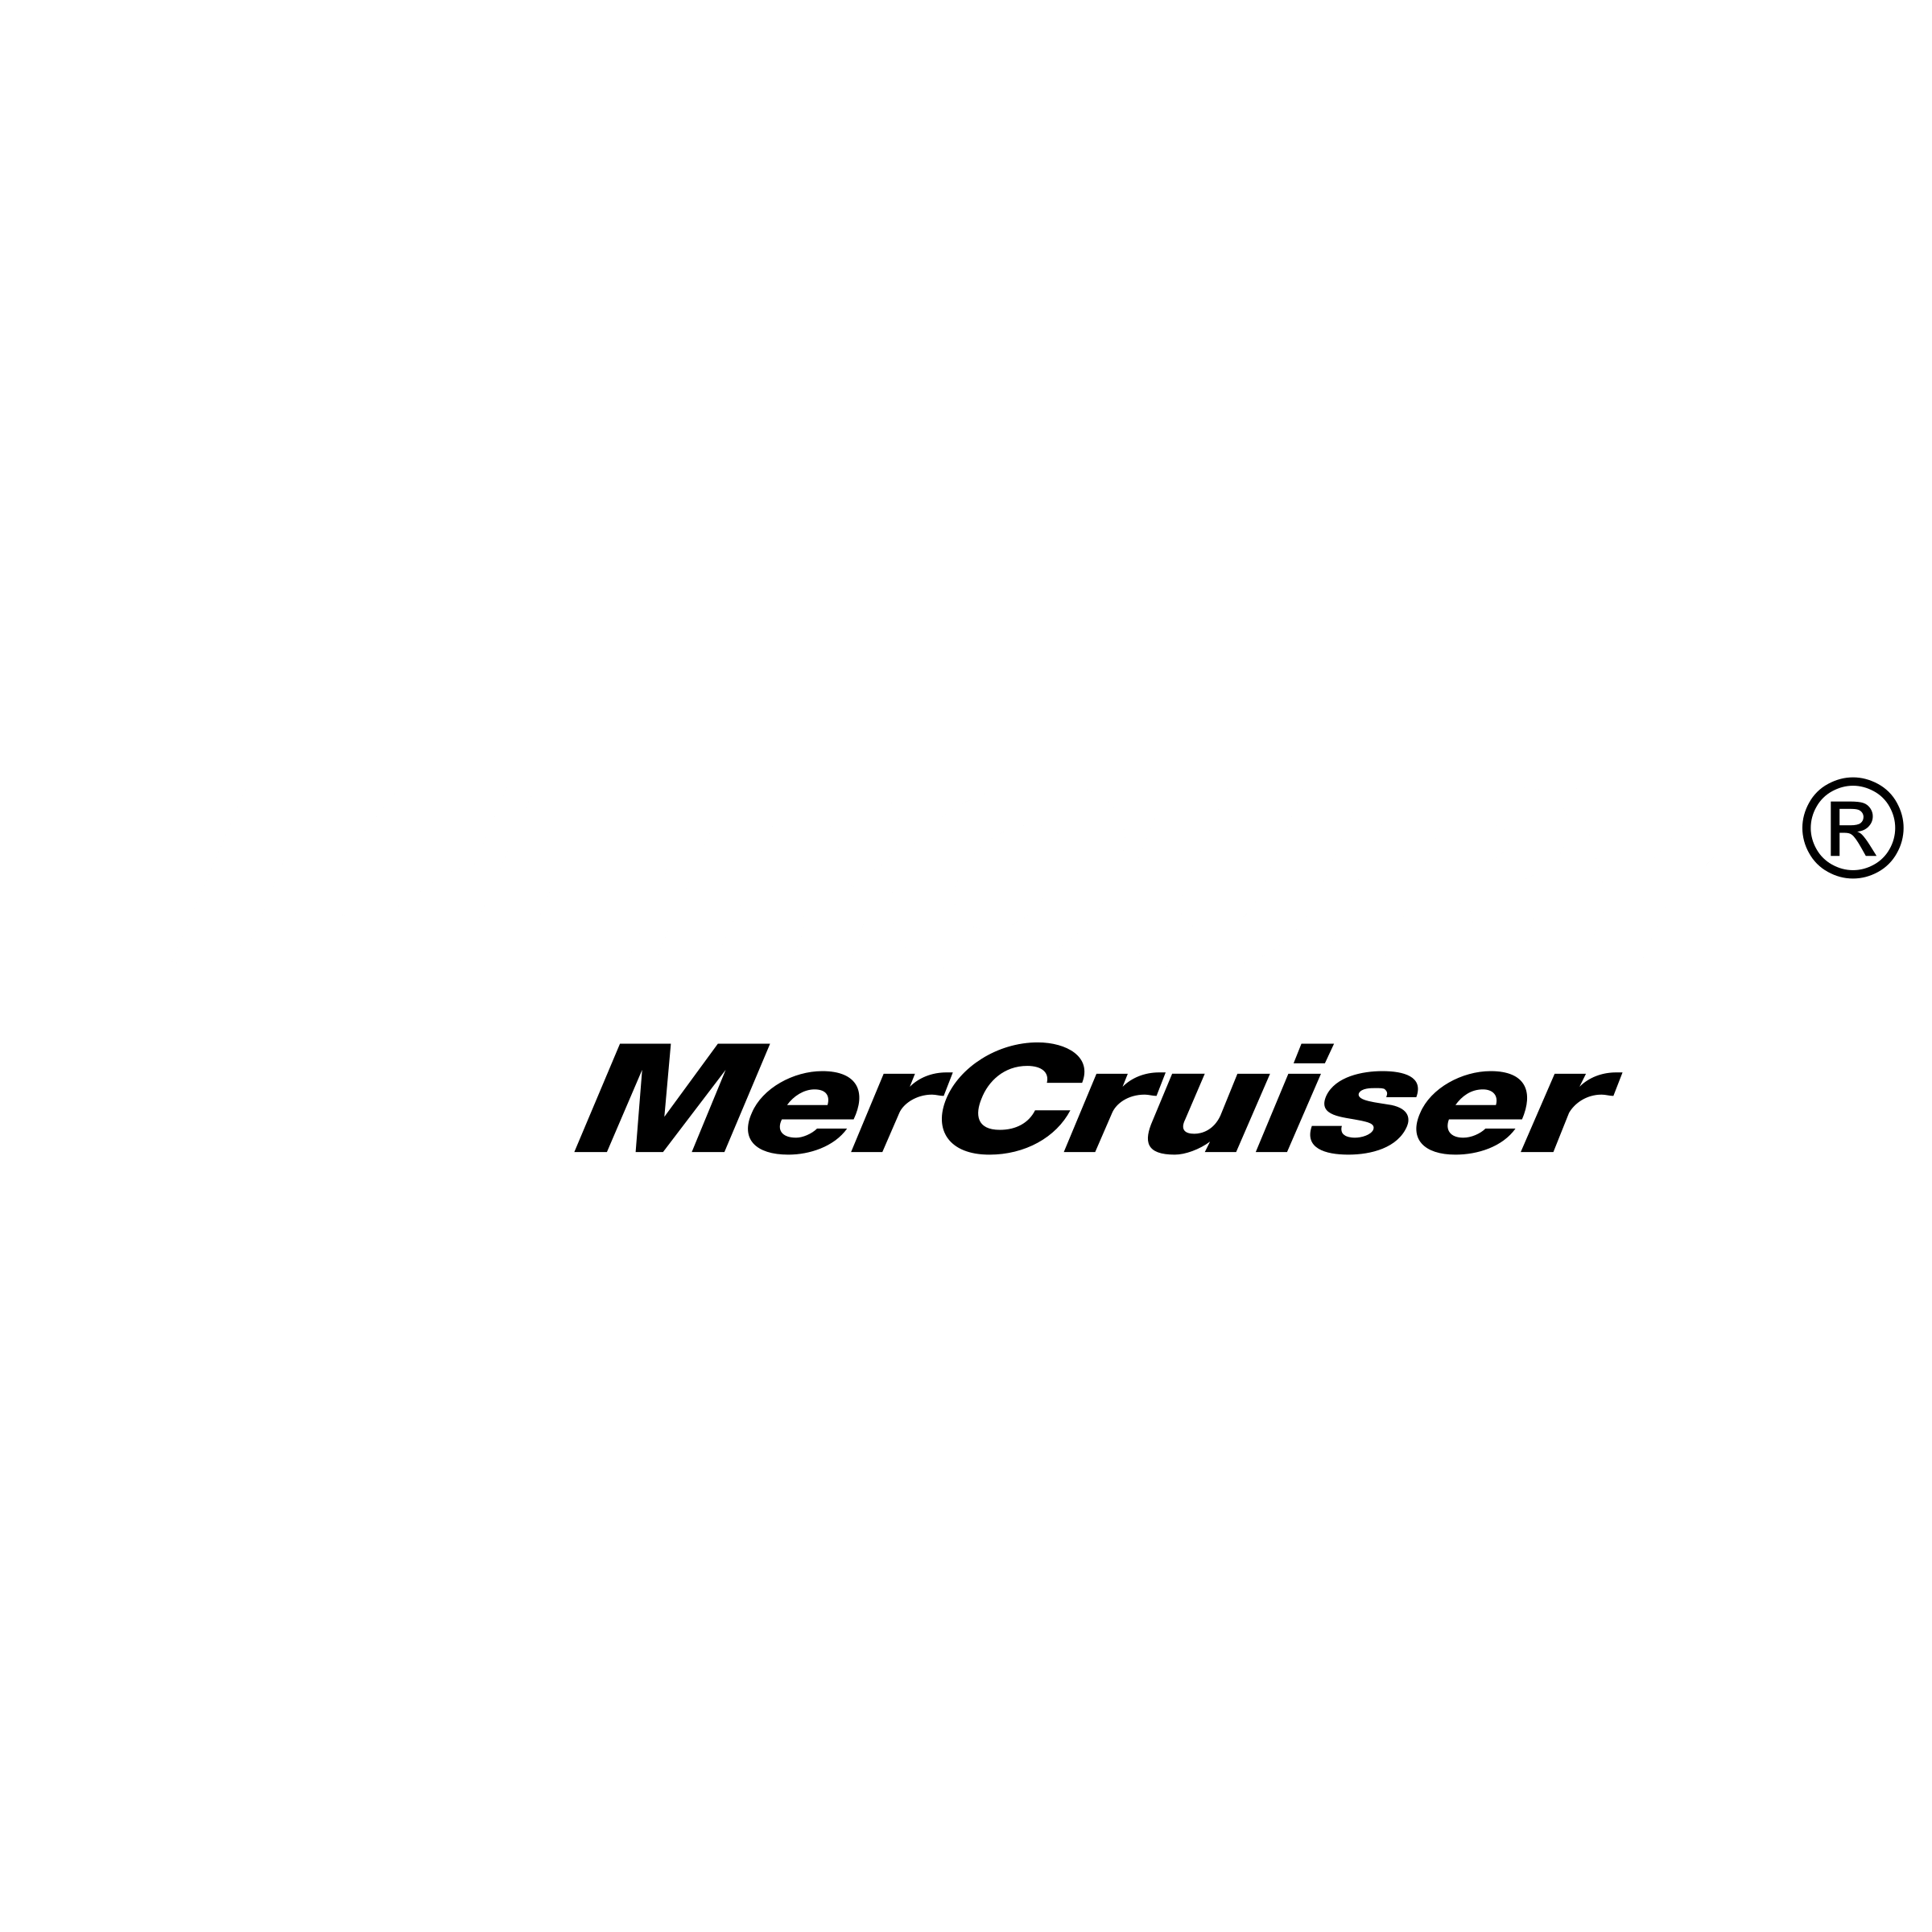 Mercruiser Logo - Mercury MerCruiser Logo PNG Transparent & SVG Vector - Freebie Supply